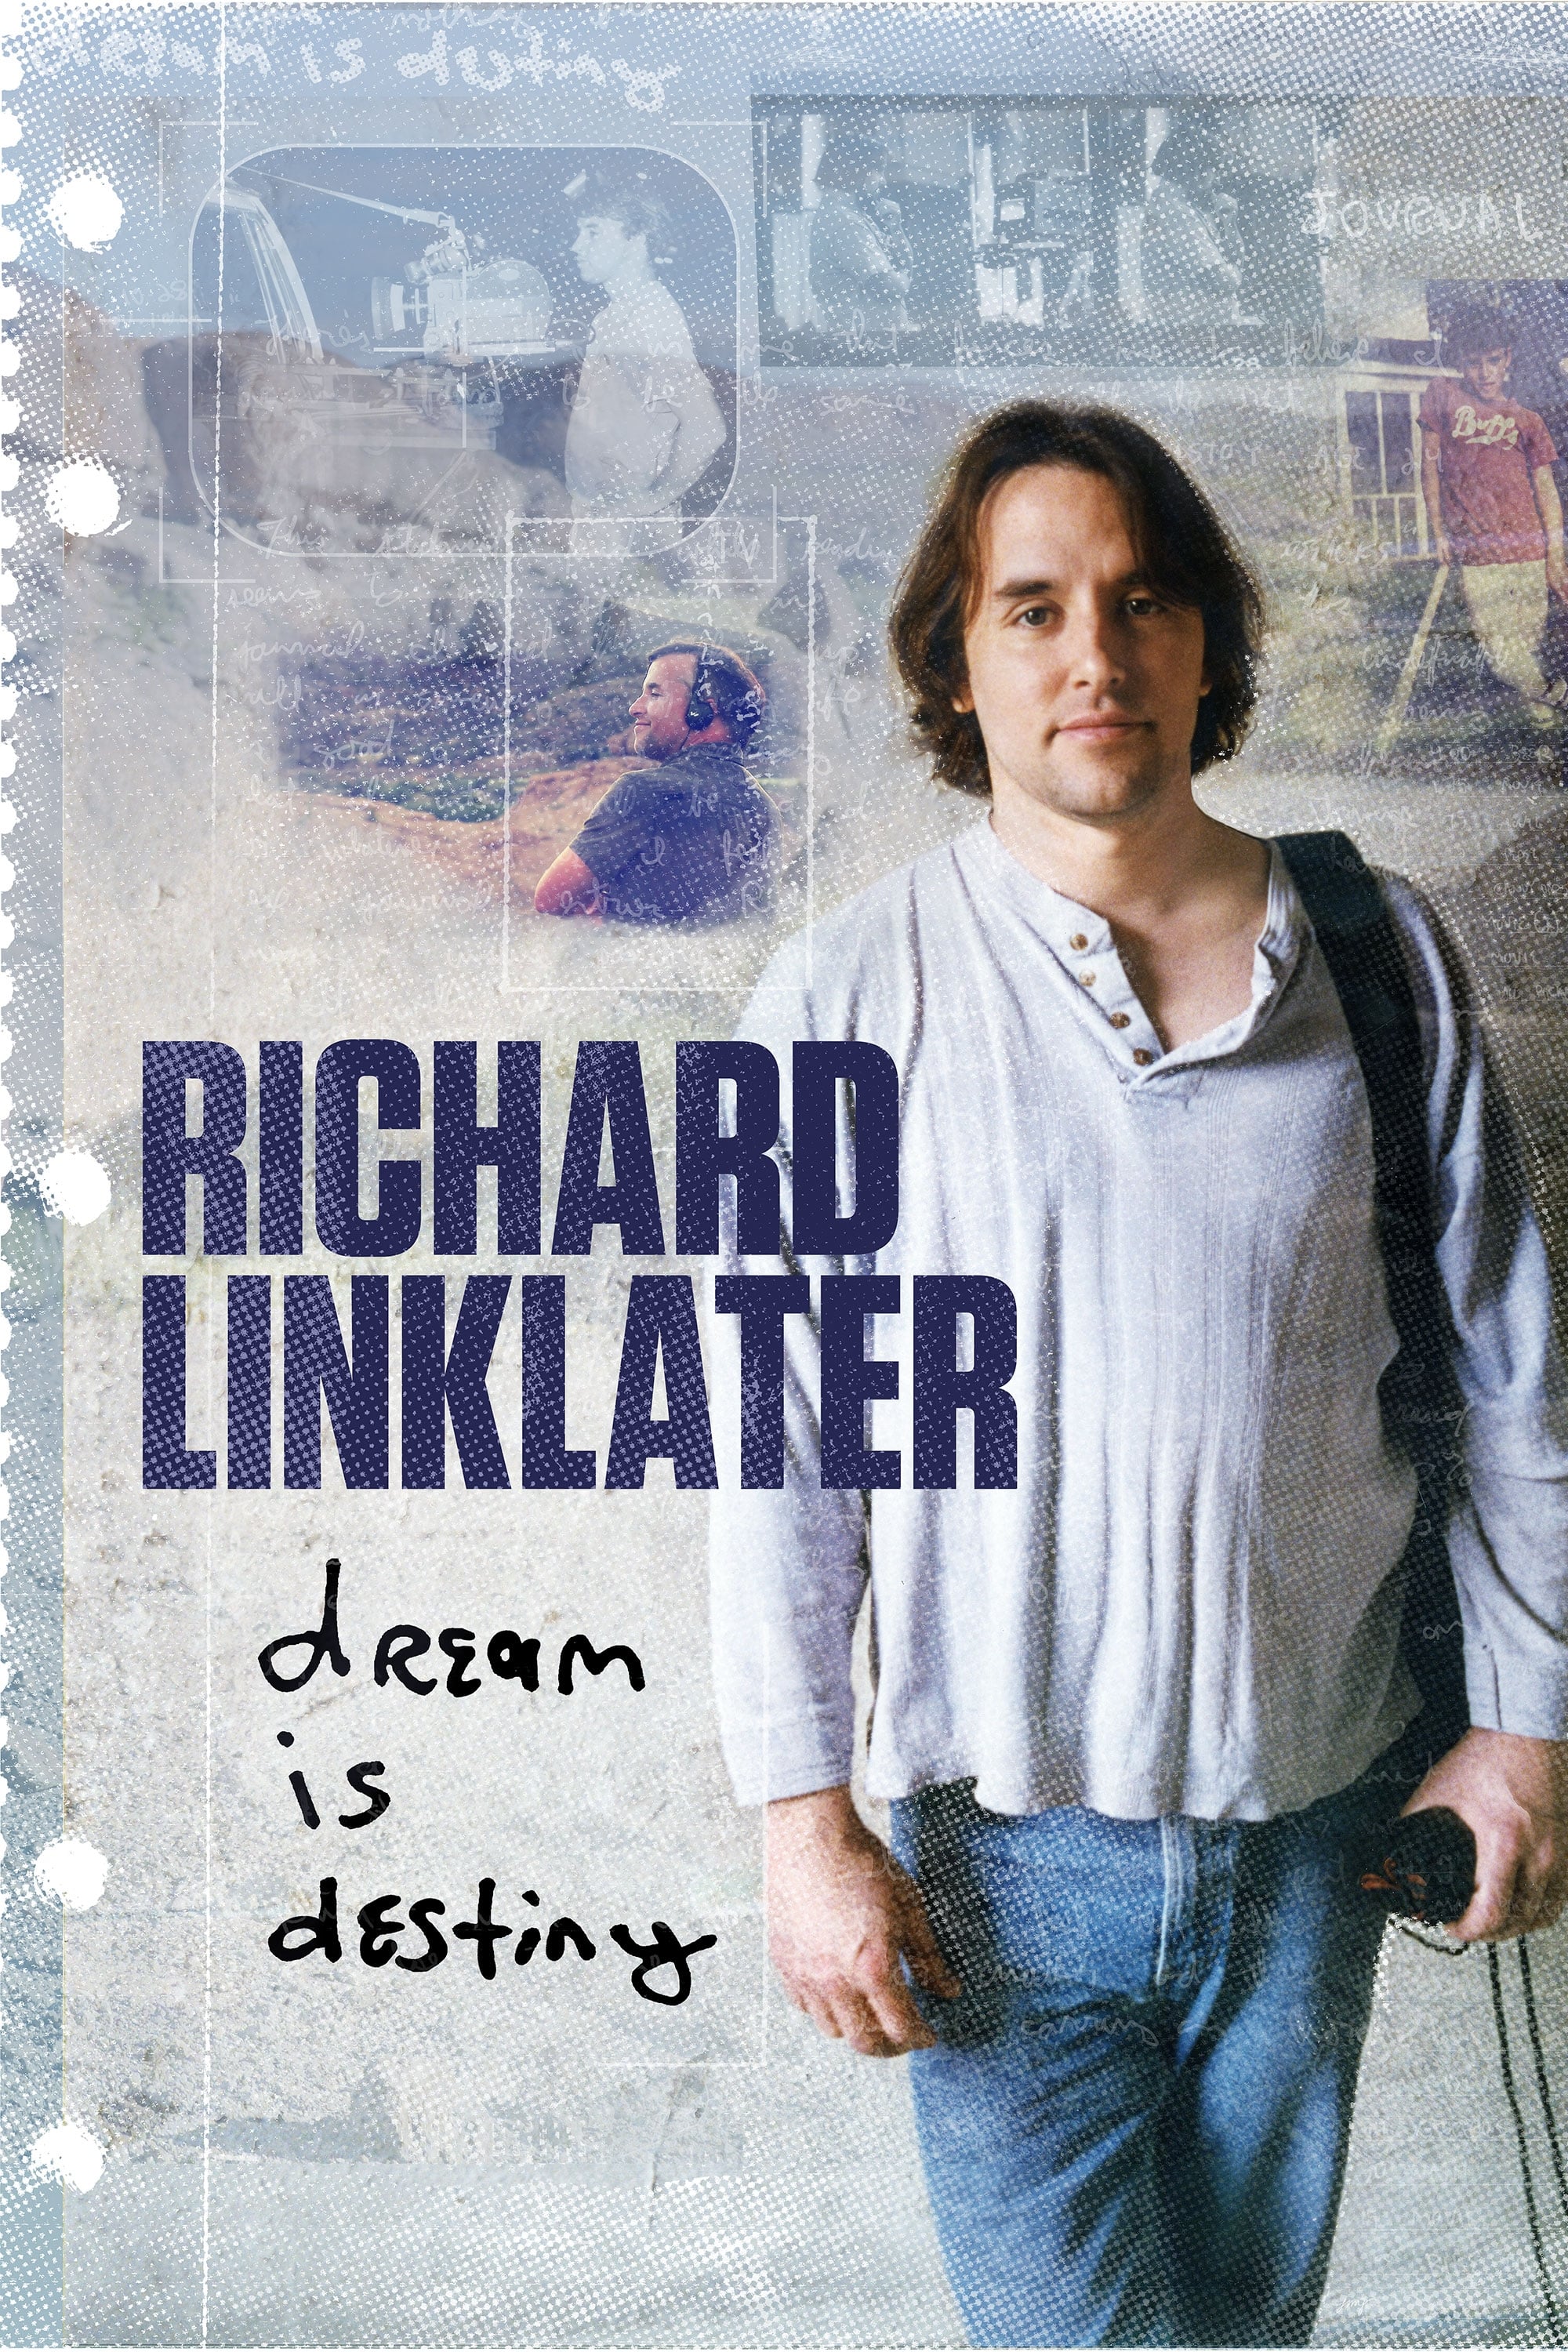 Richard Linklater: Retrato del indie americano